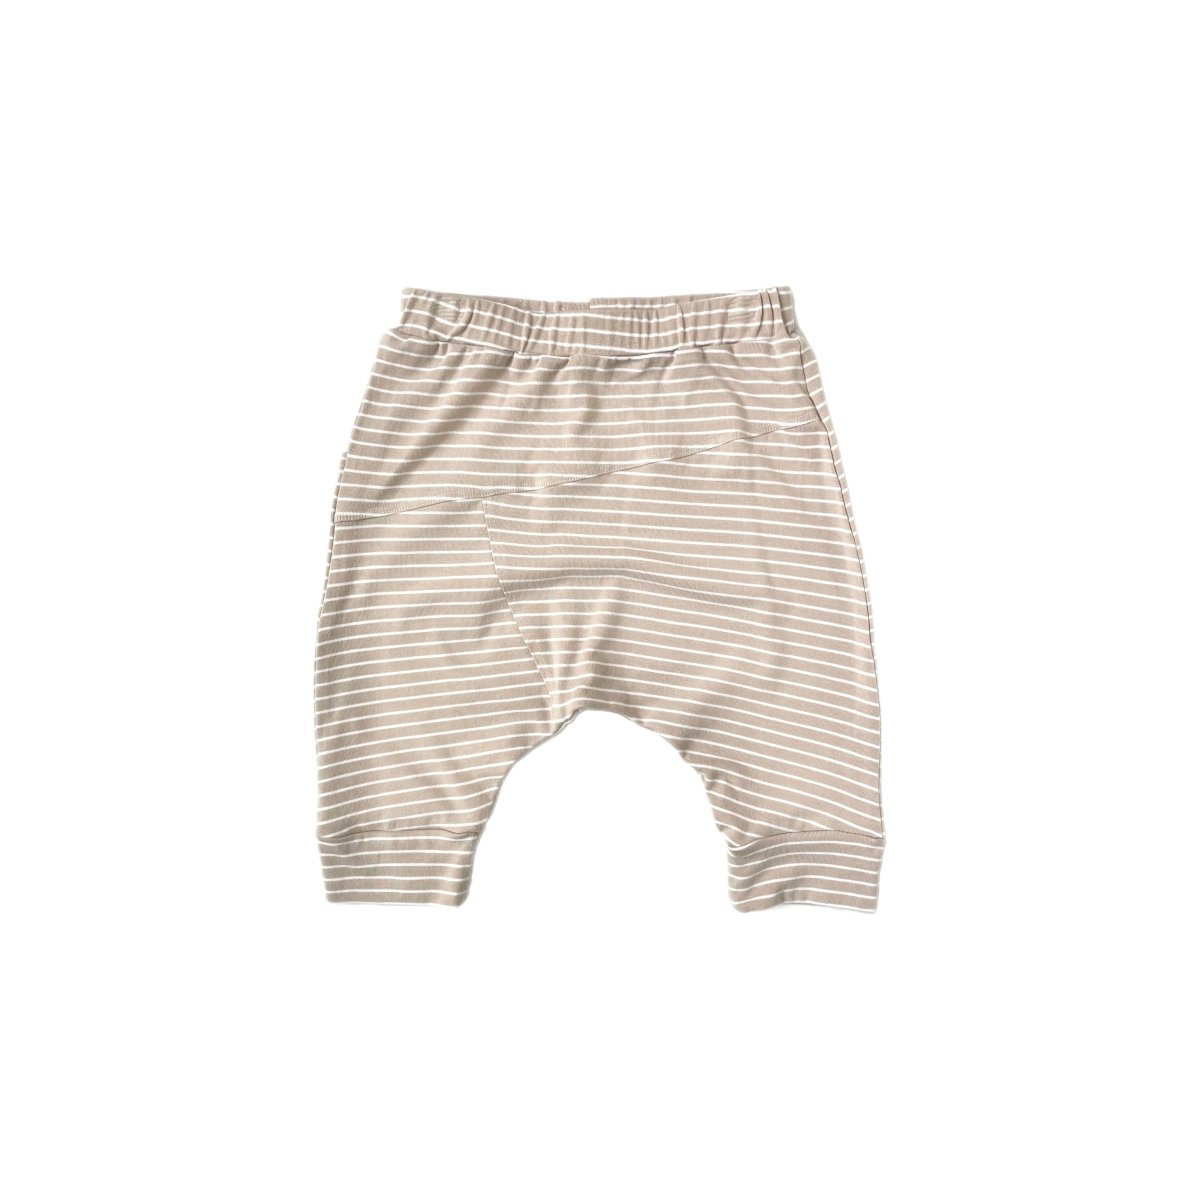 Harem Shorts- Biscotti Stripe - Posh Kiddos